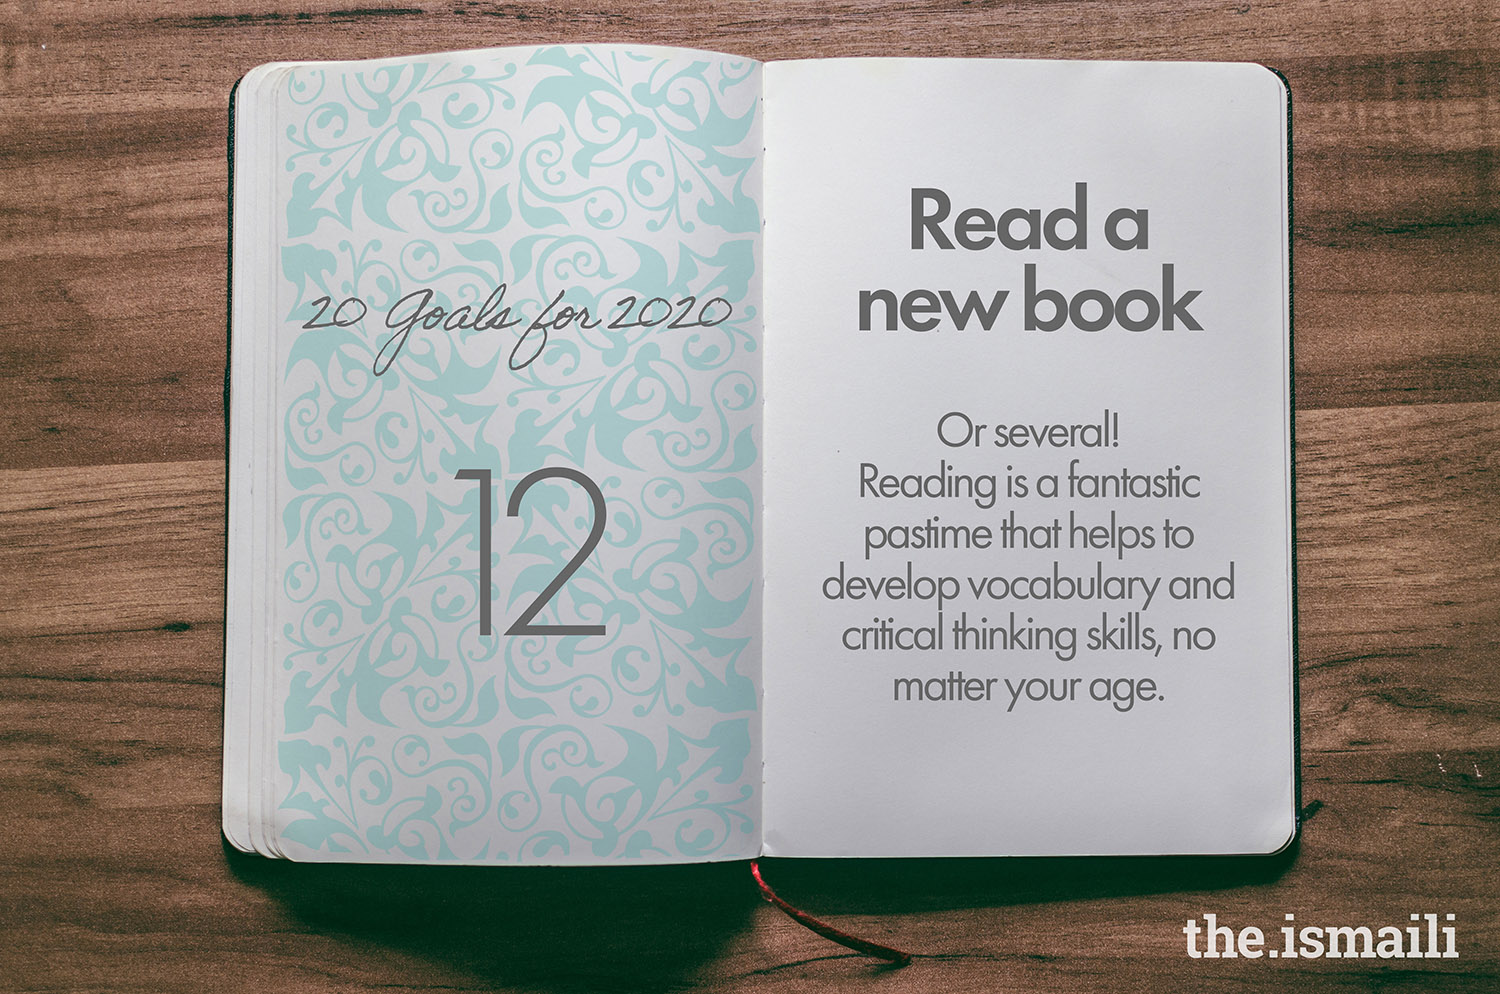 Goal 12: Read a new book